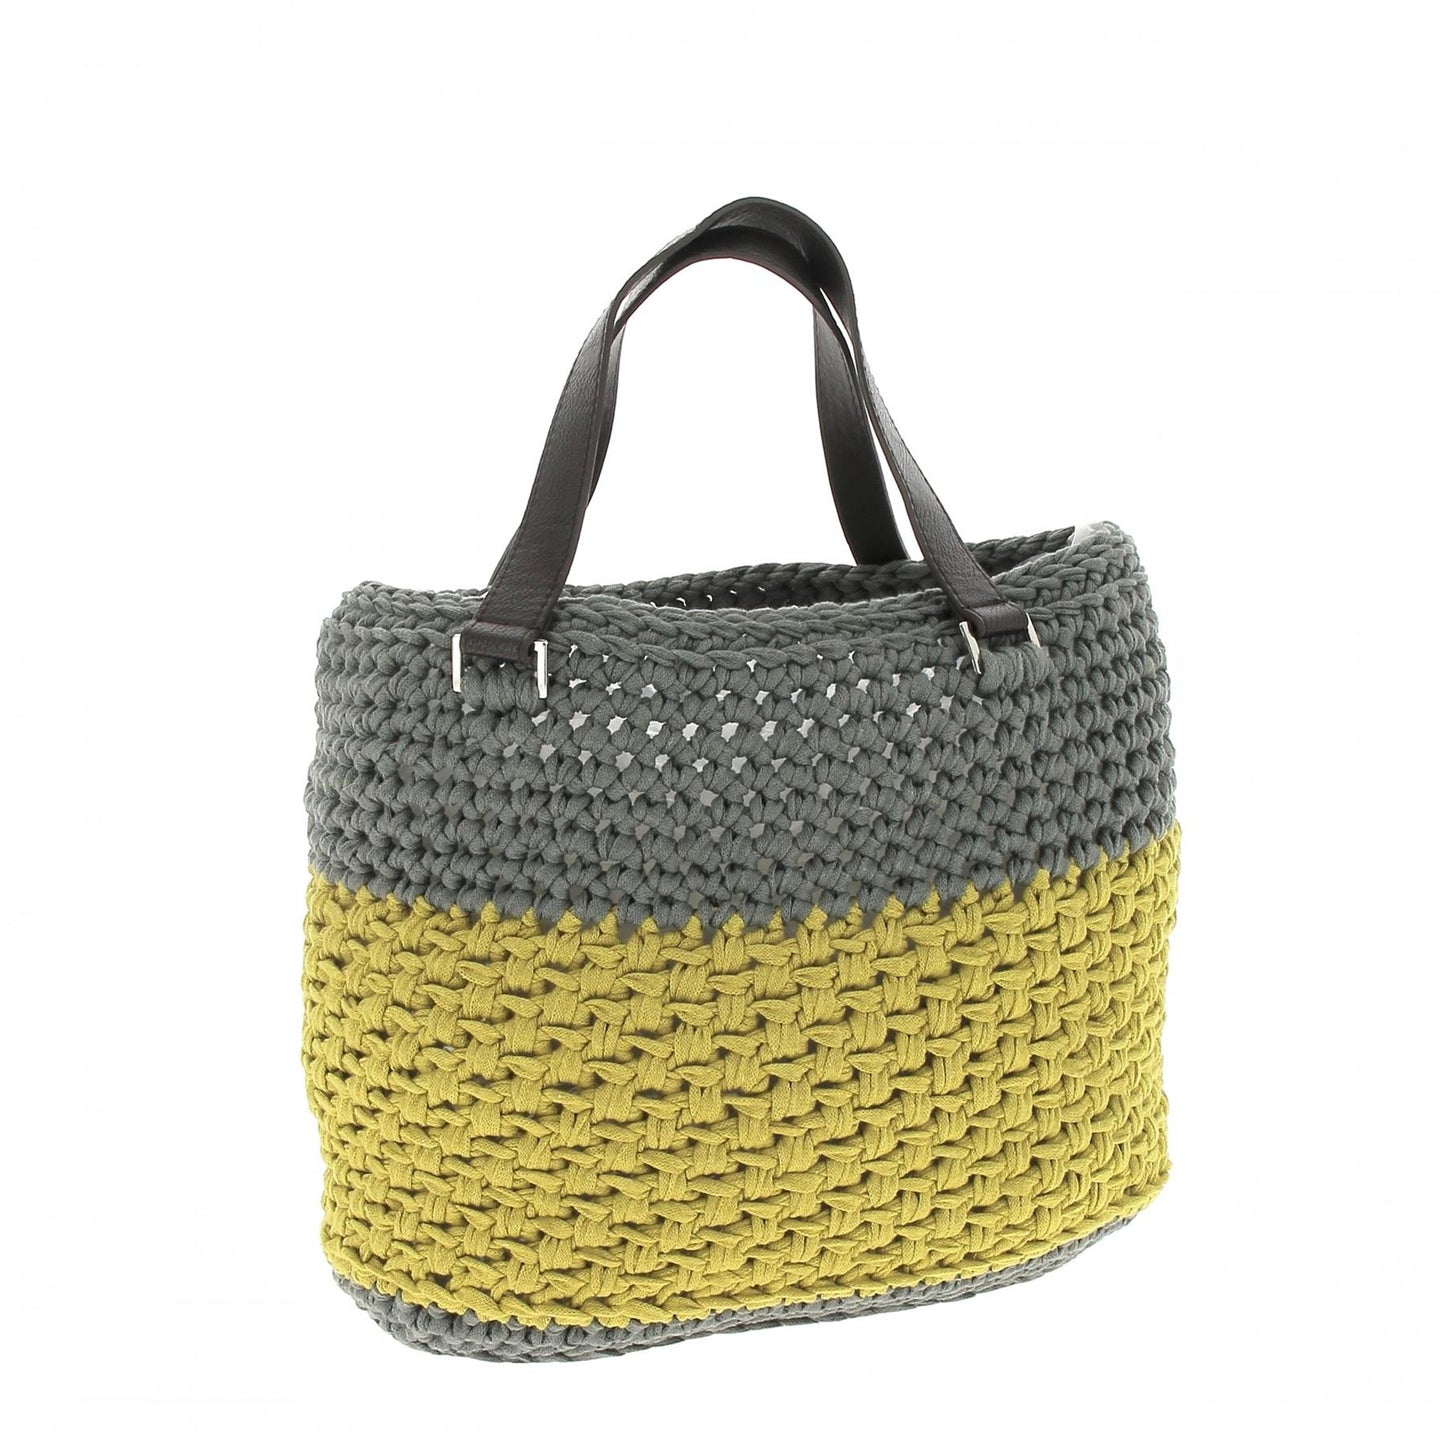 Hoooked RibbonXL Dried Herb Cotton Valencia Bag Crochet Kit